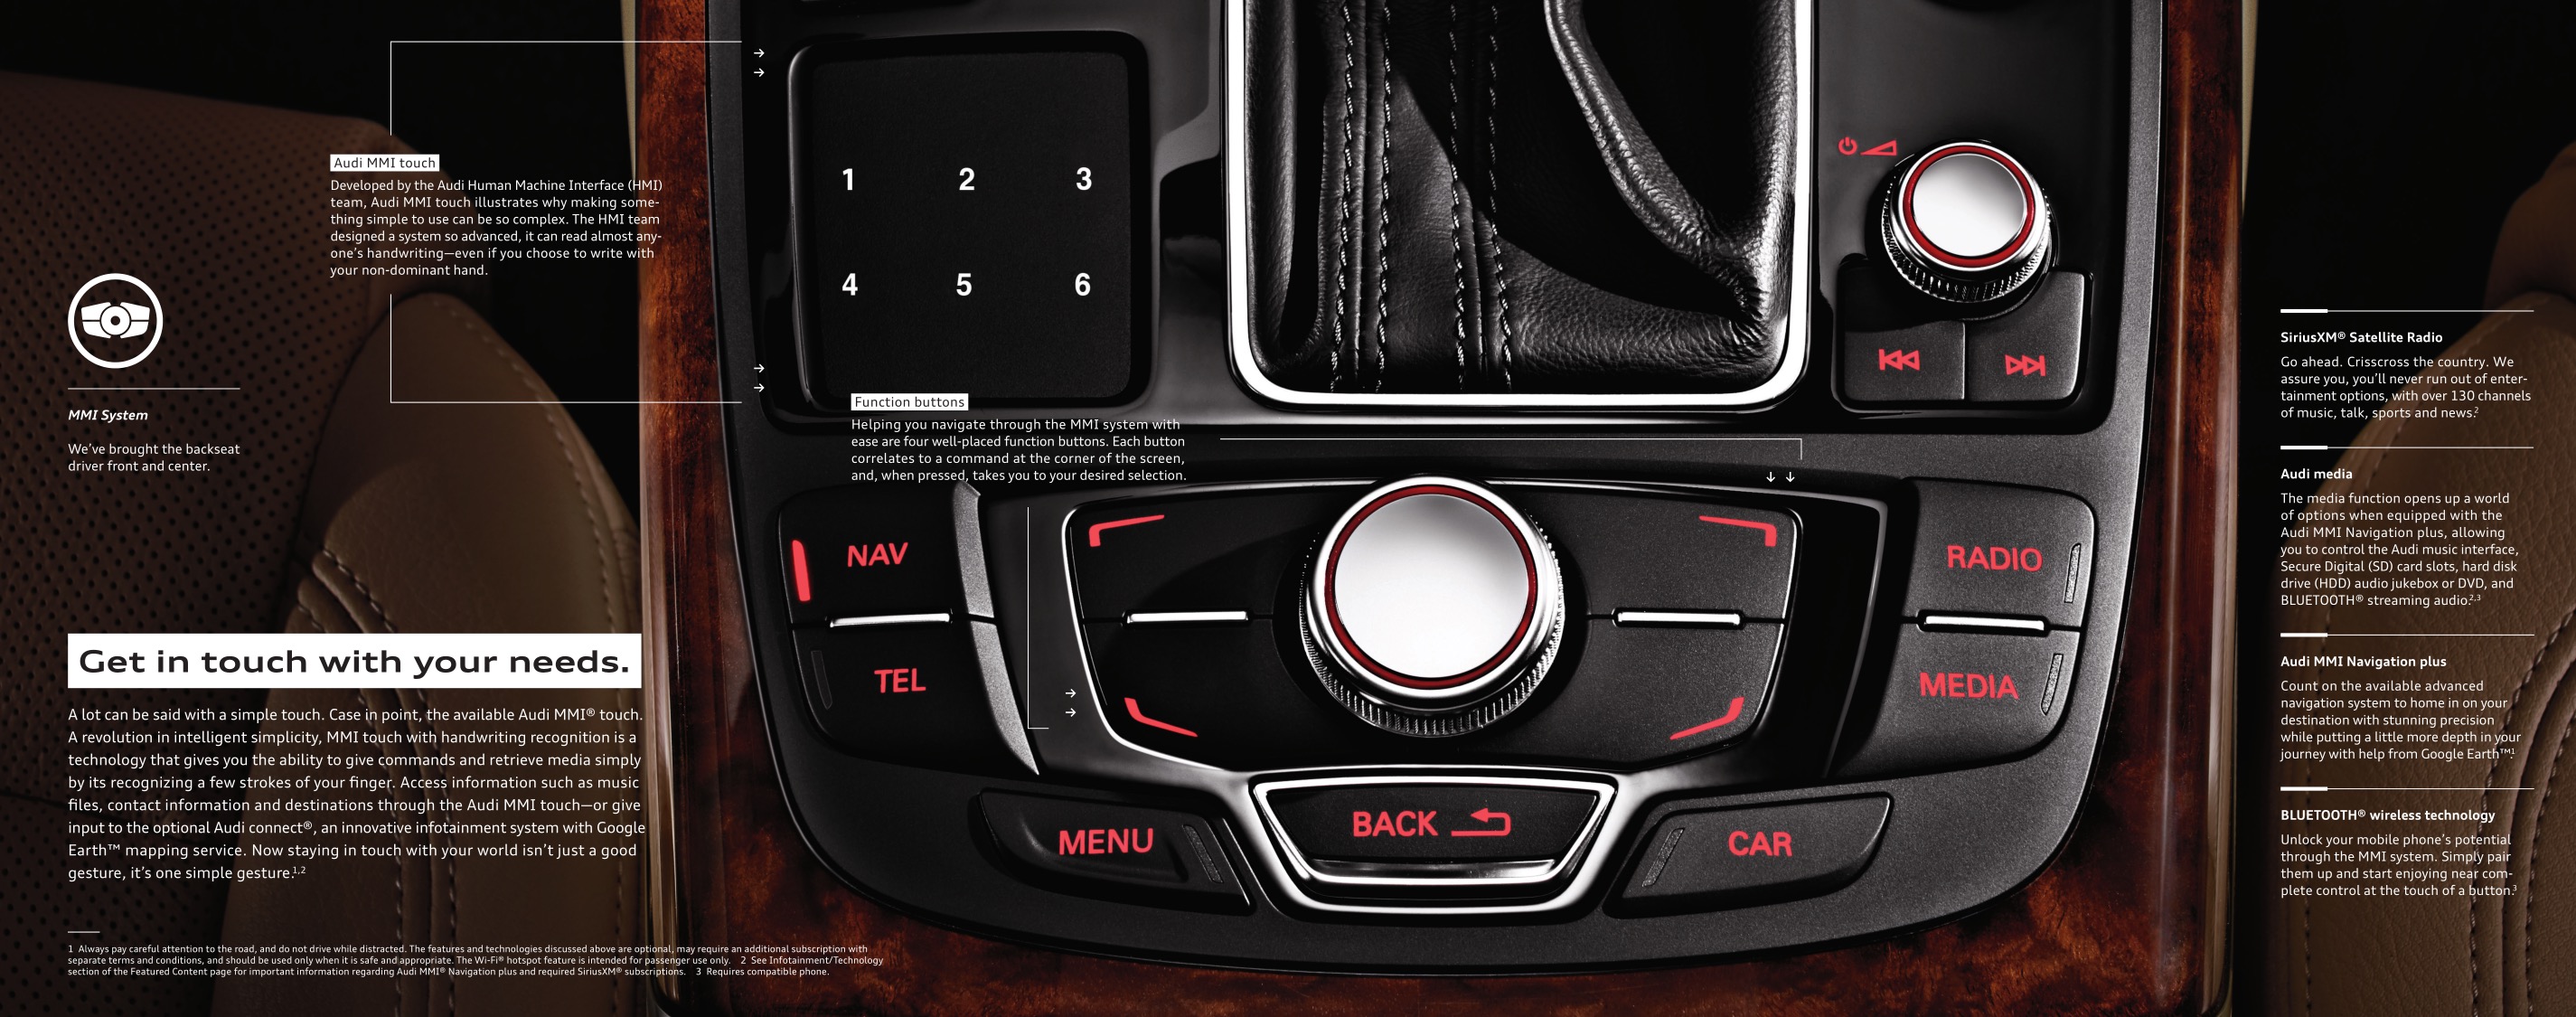 2014 Audi A6 Brochure Page 2